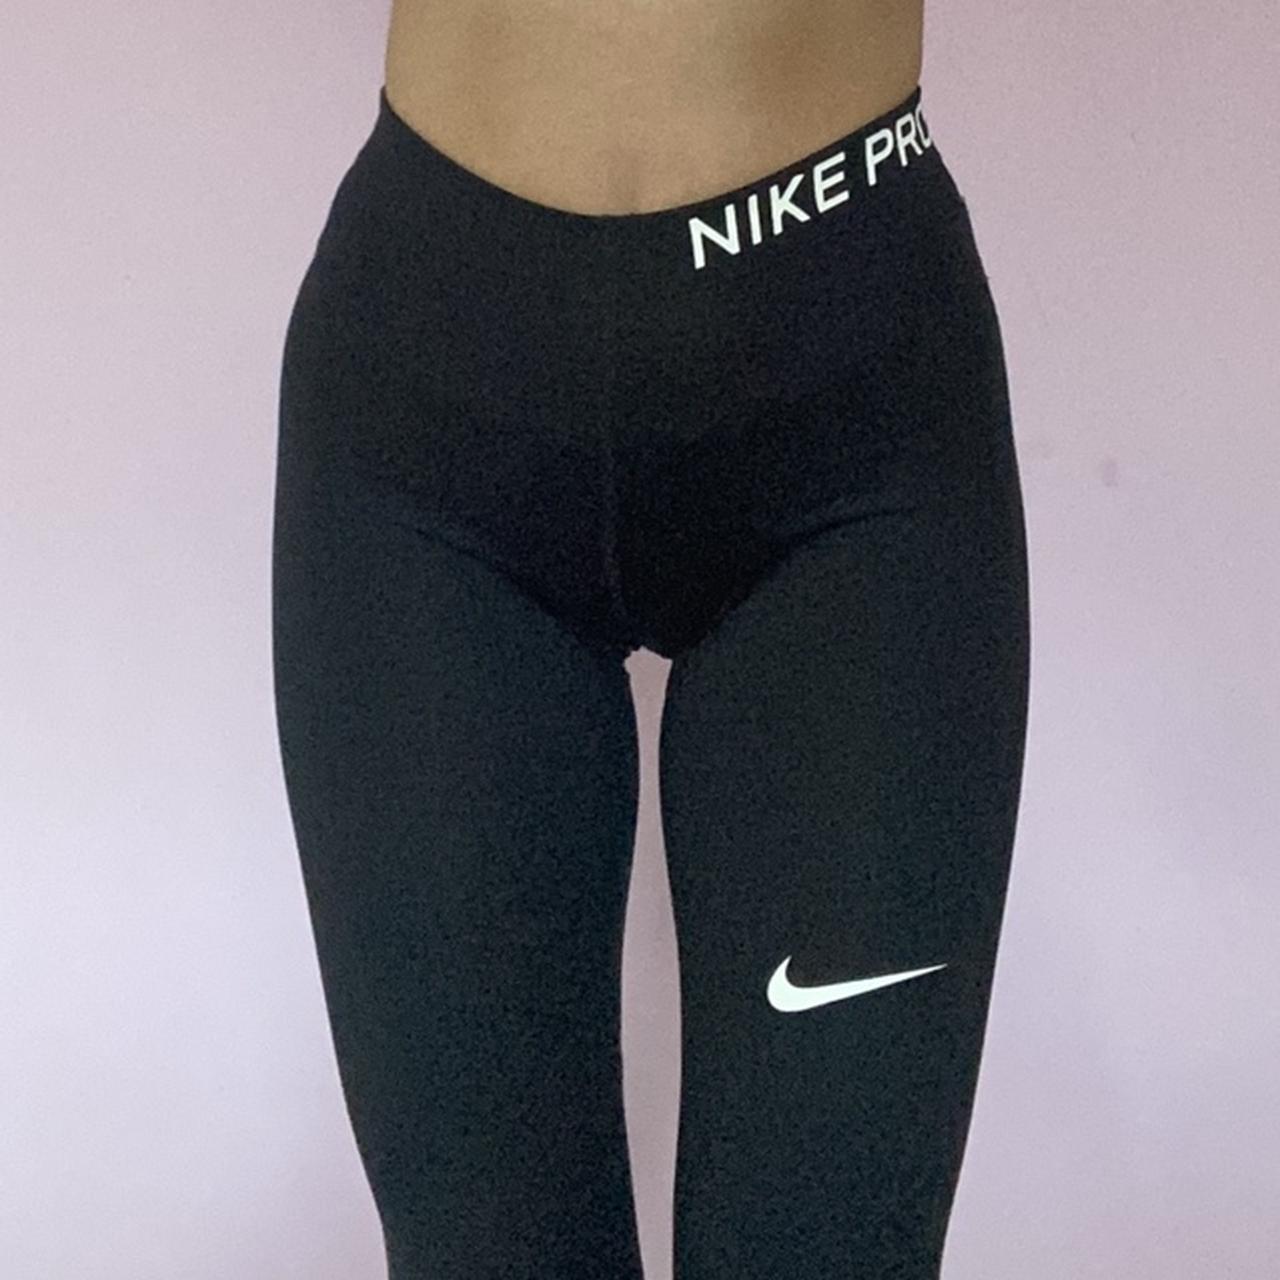 Nike pro leggings, Sold <3